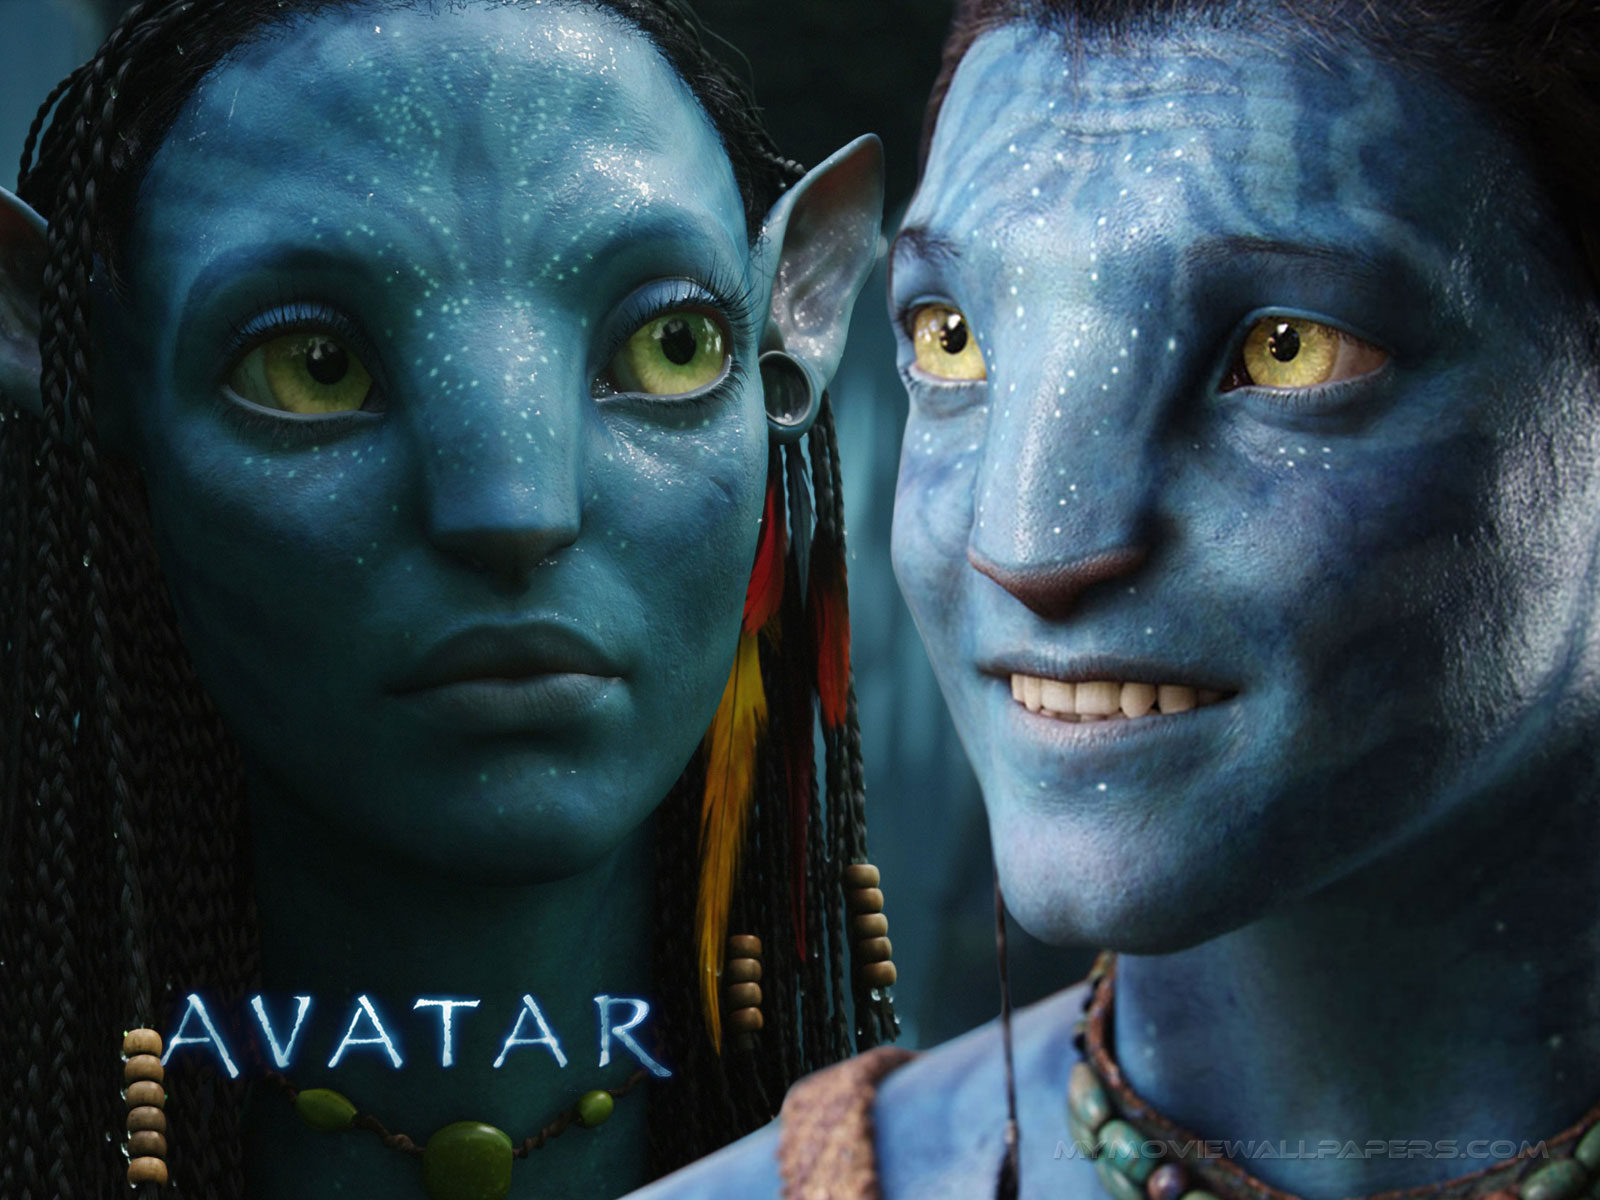 Original Avatar HD Wallpapers For All Avatar Wallpaper Fans